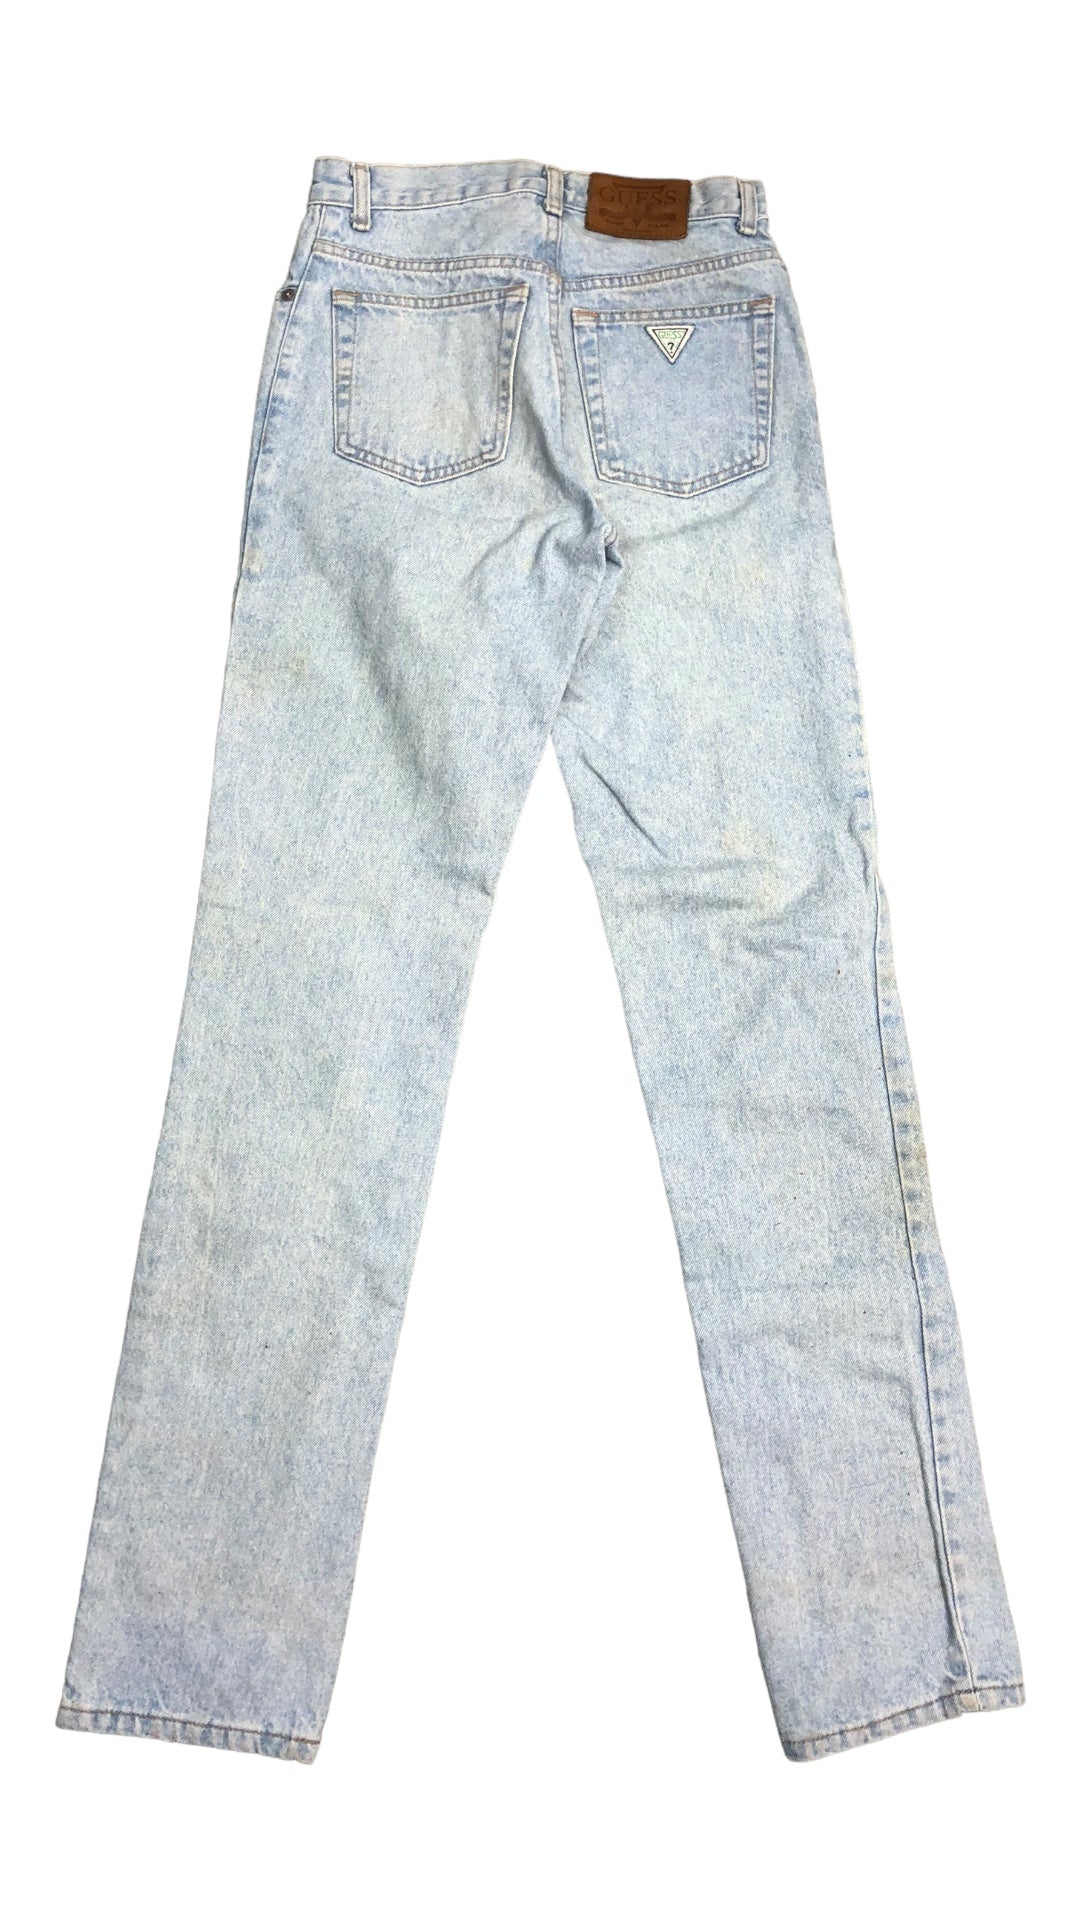 VTG Guess Jeans Style 10001 Sz 27x34